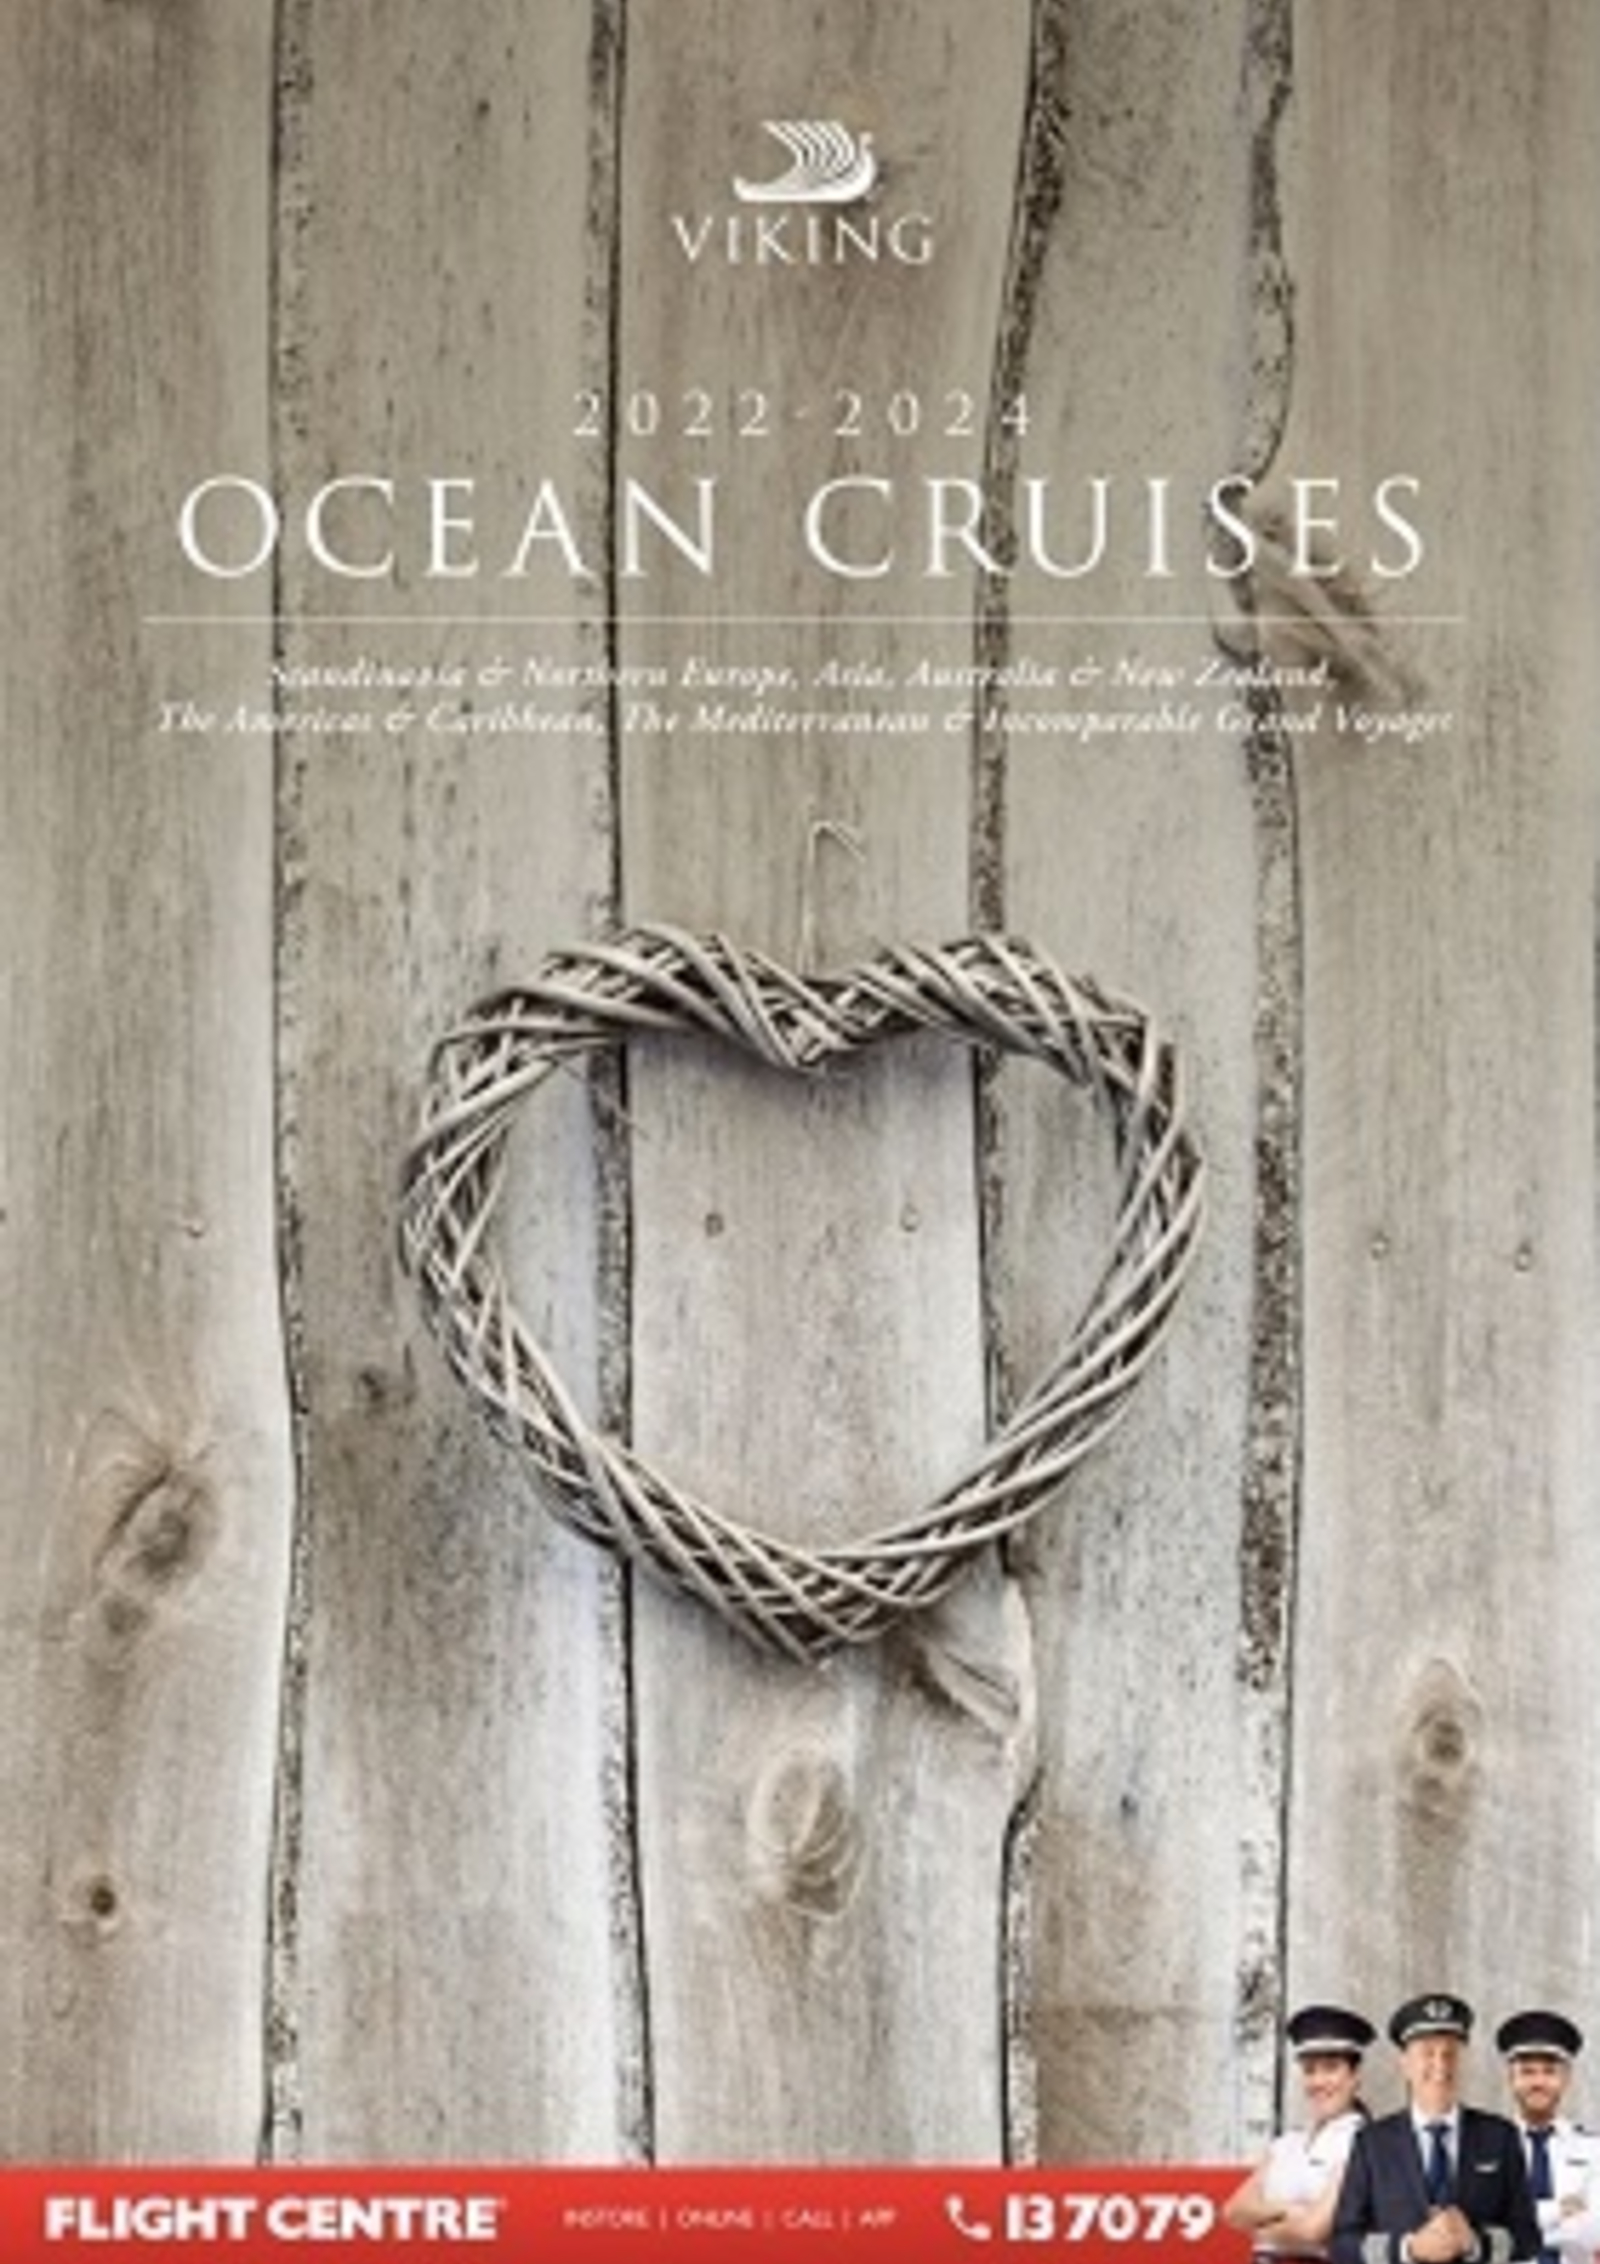 Viking Ocean Cruises Tile.JPG